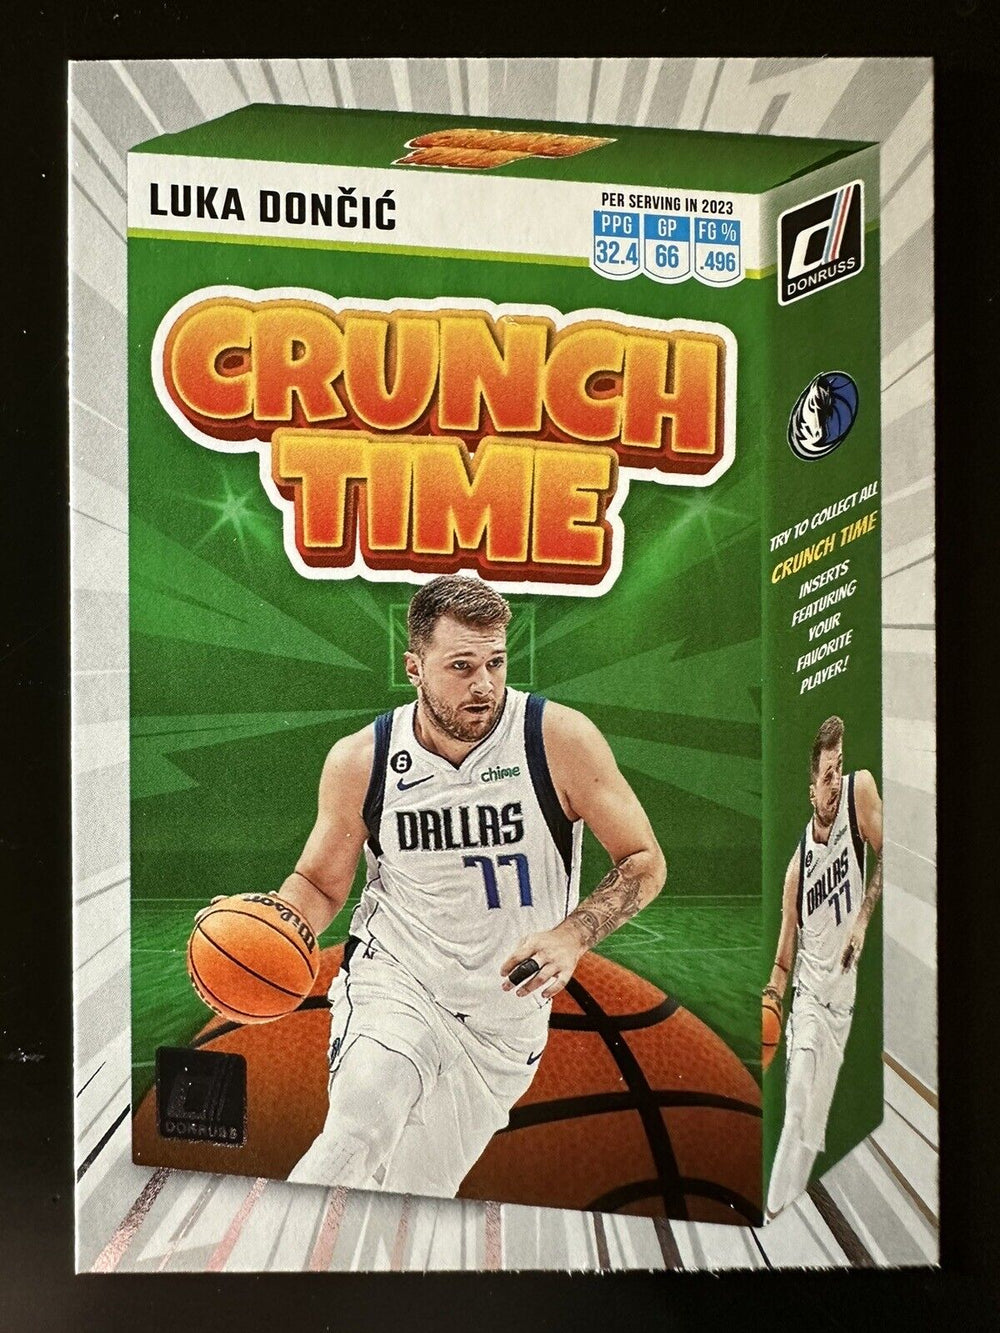 Luka Doncic 2023 2024 Panini Donruss Crunch Time Series Mint Card #1